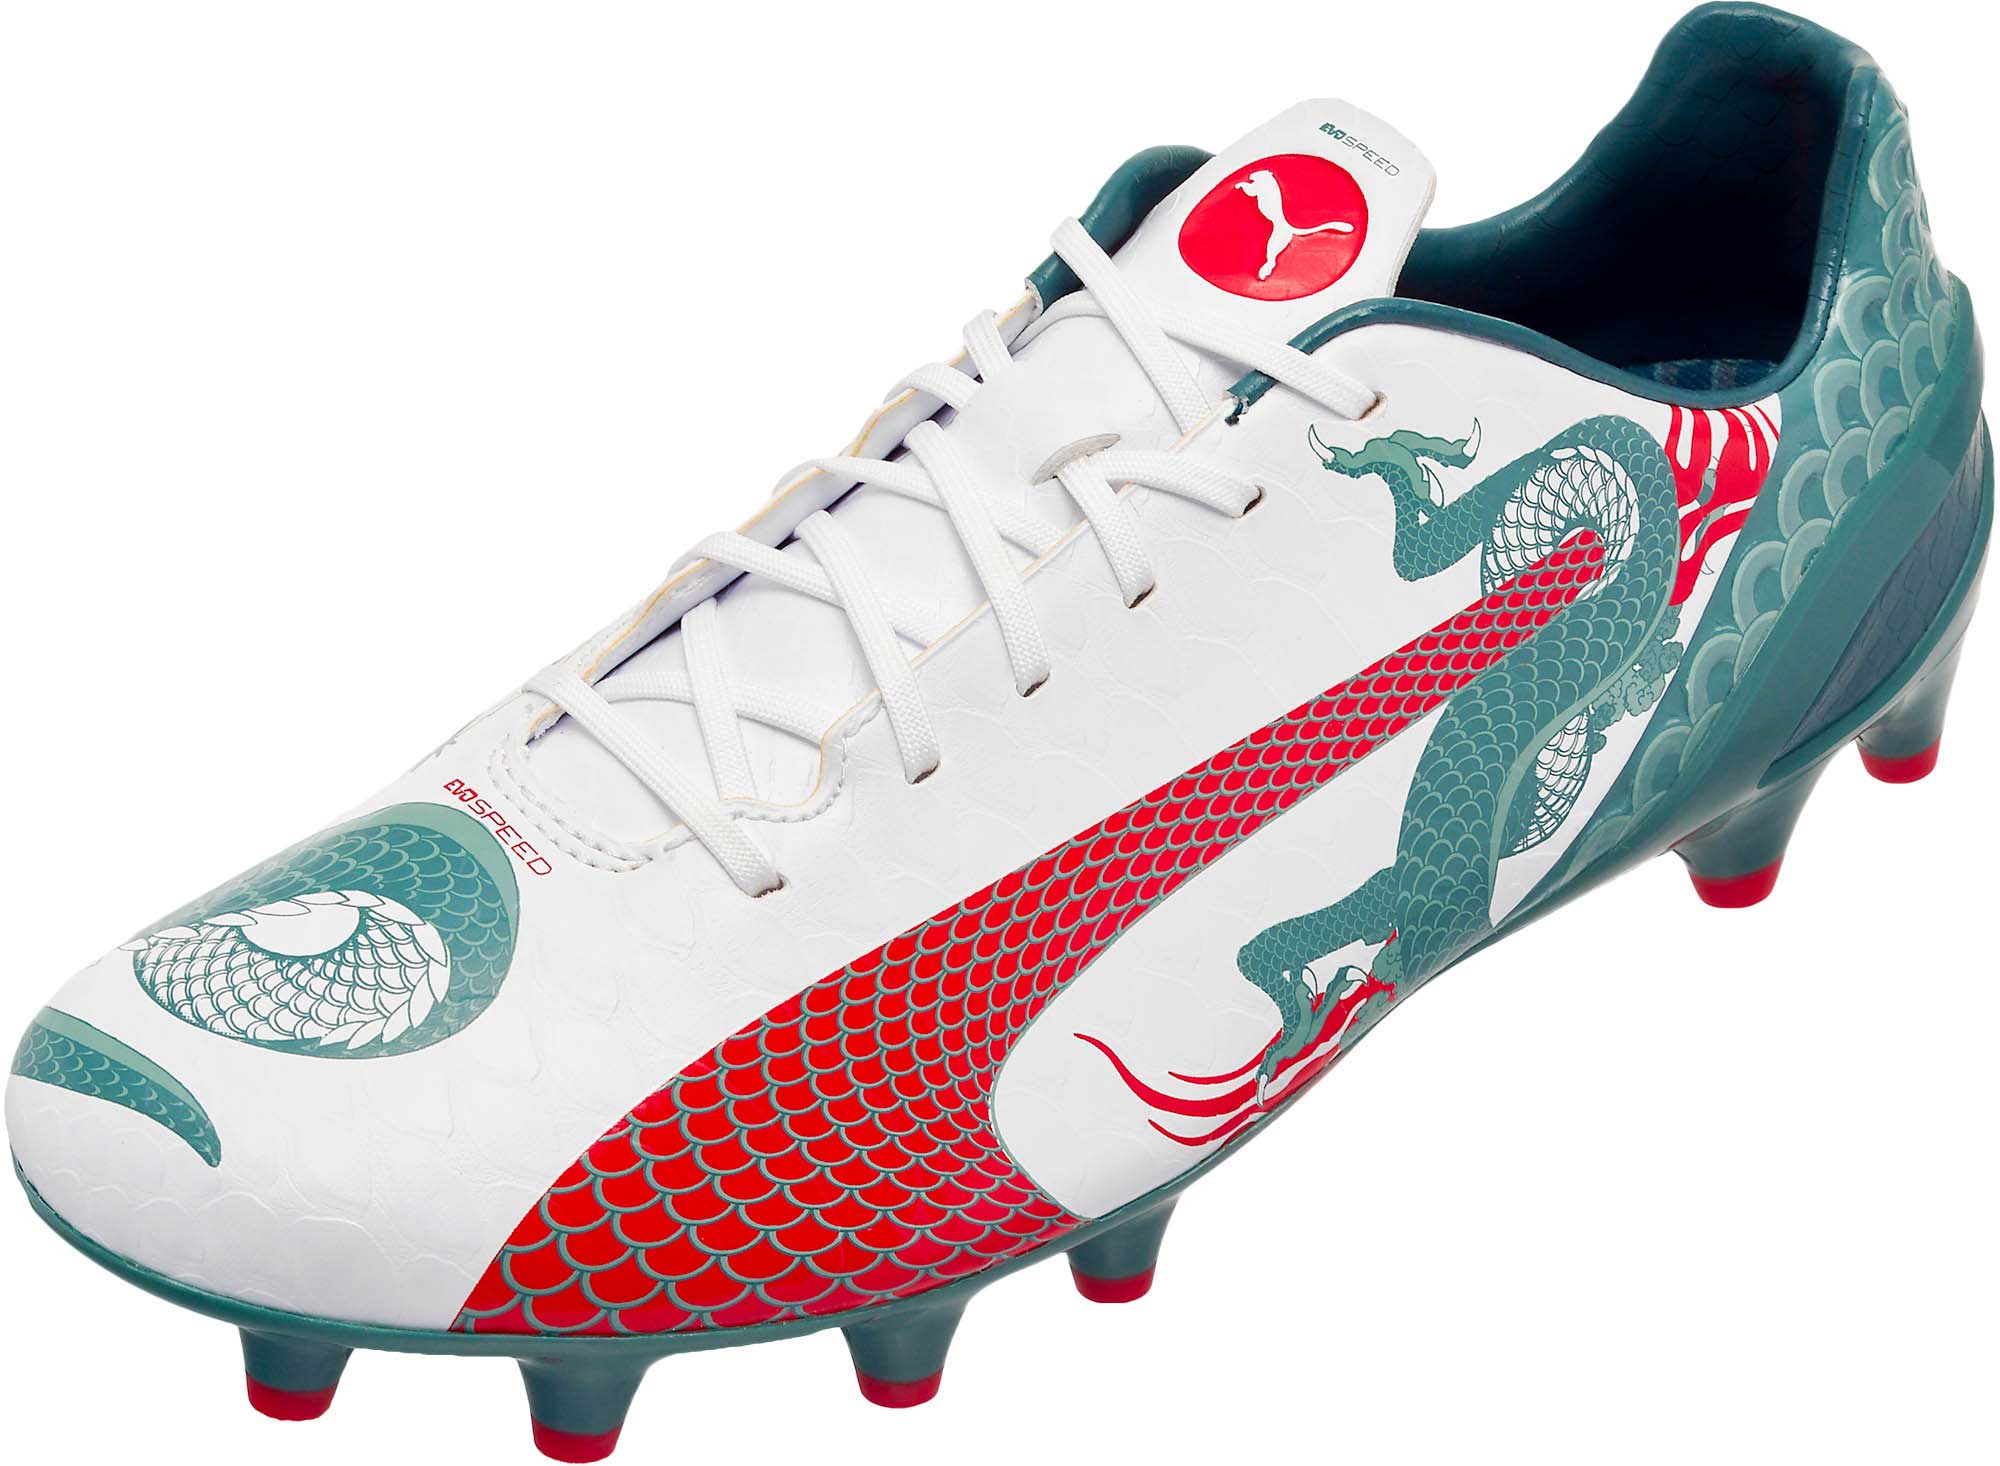 puma evospeed soccer boots Sale,up to 